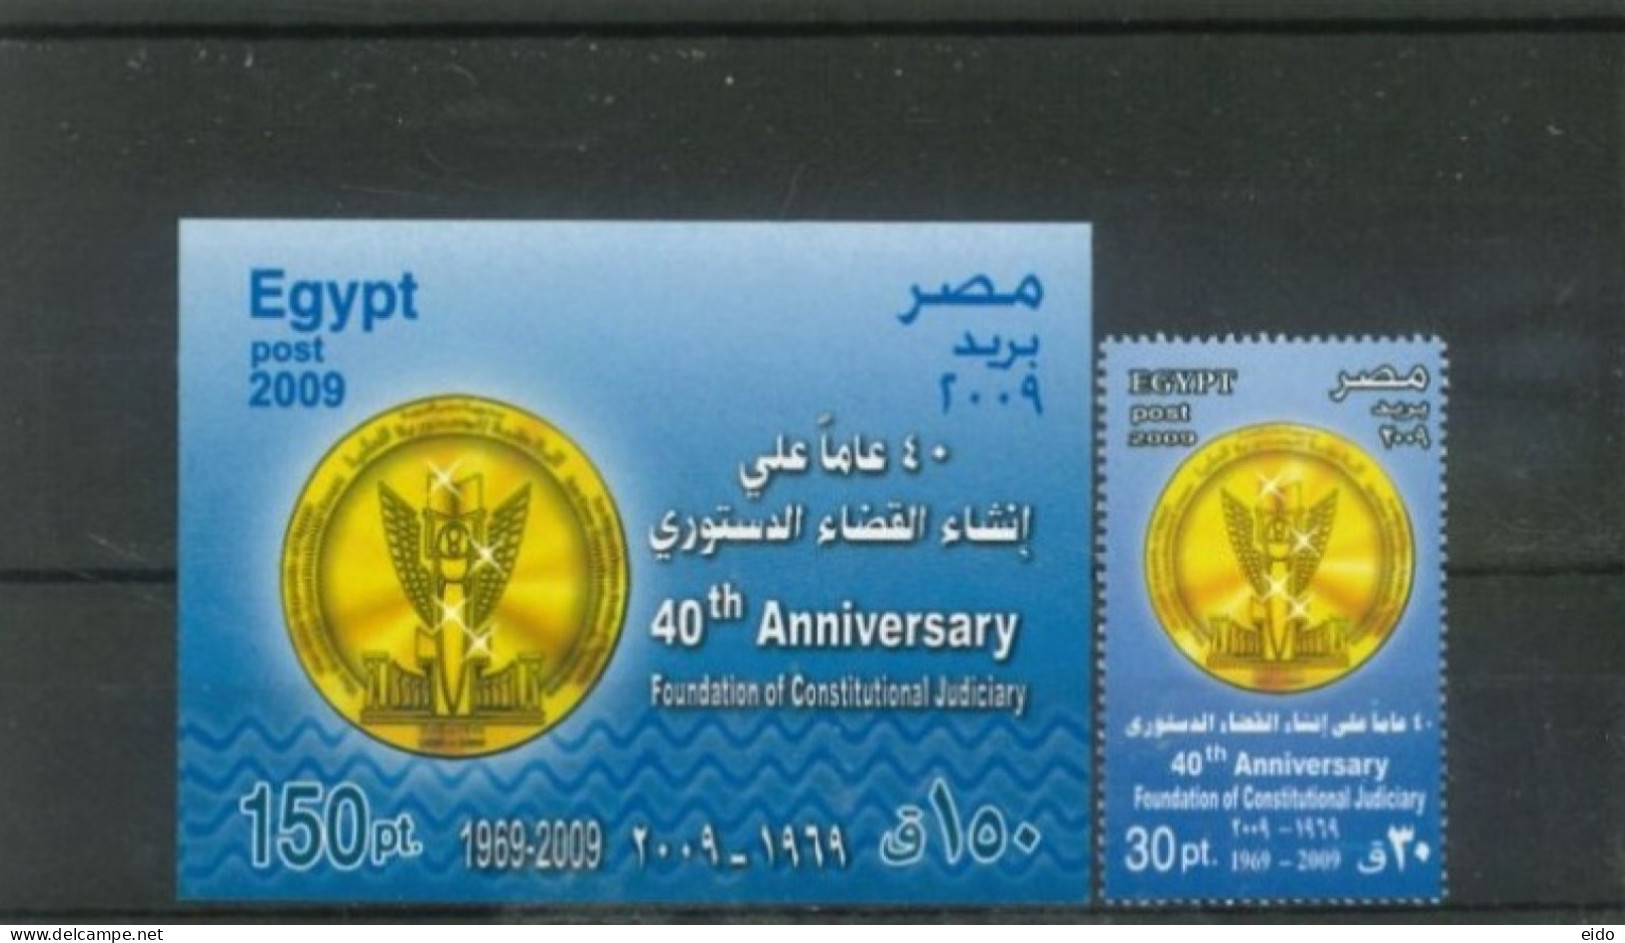 EGYPT - 2009, 40th ANNIVERSARY FOUNDATION OF CONSTITUTIONAL JUDICIARY MINIATURE STAMP SHEET & STAMP, UMM (**). - Briefe U. Dokumente